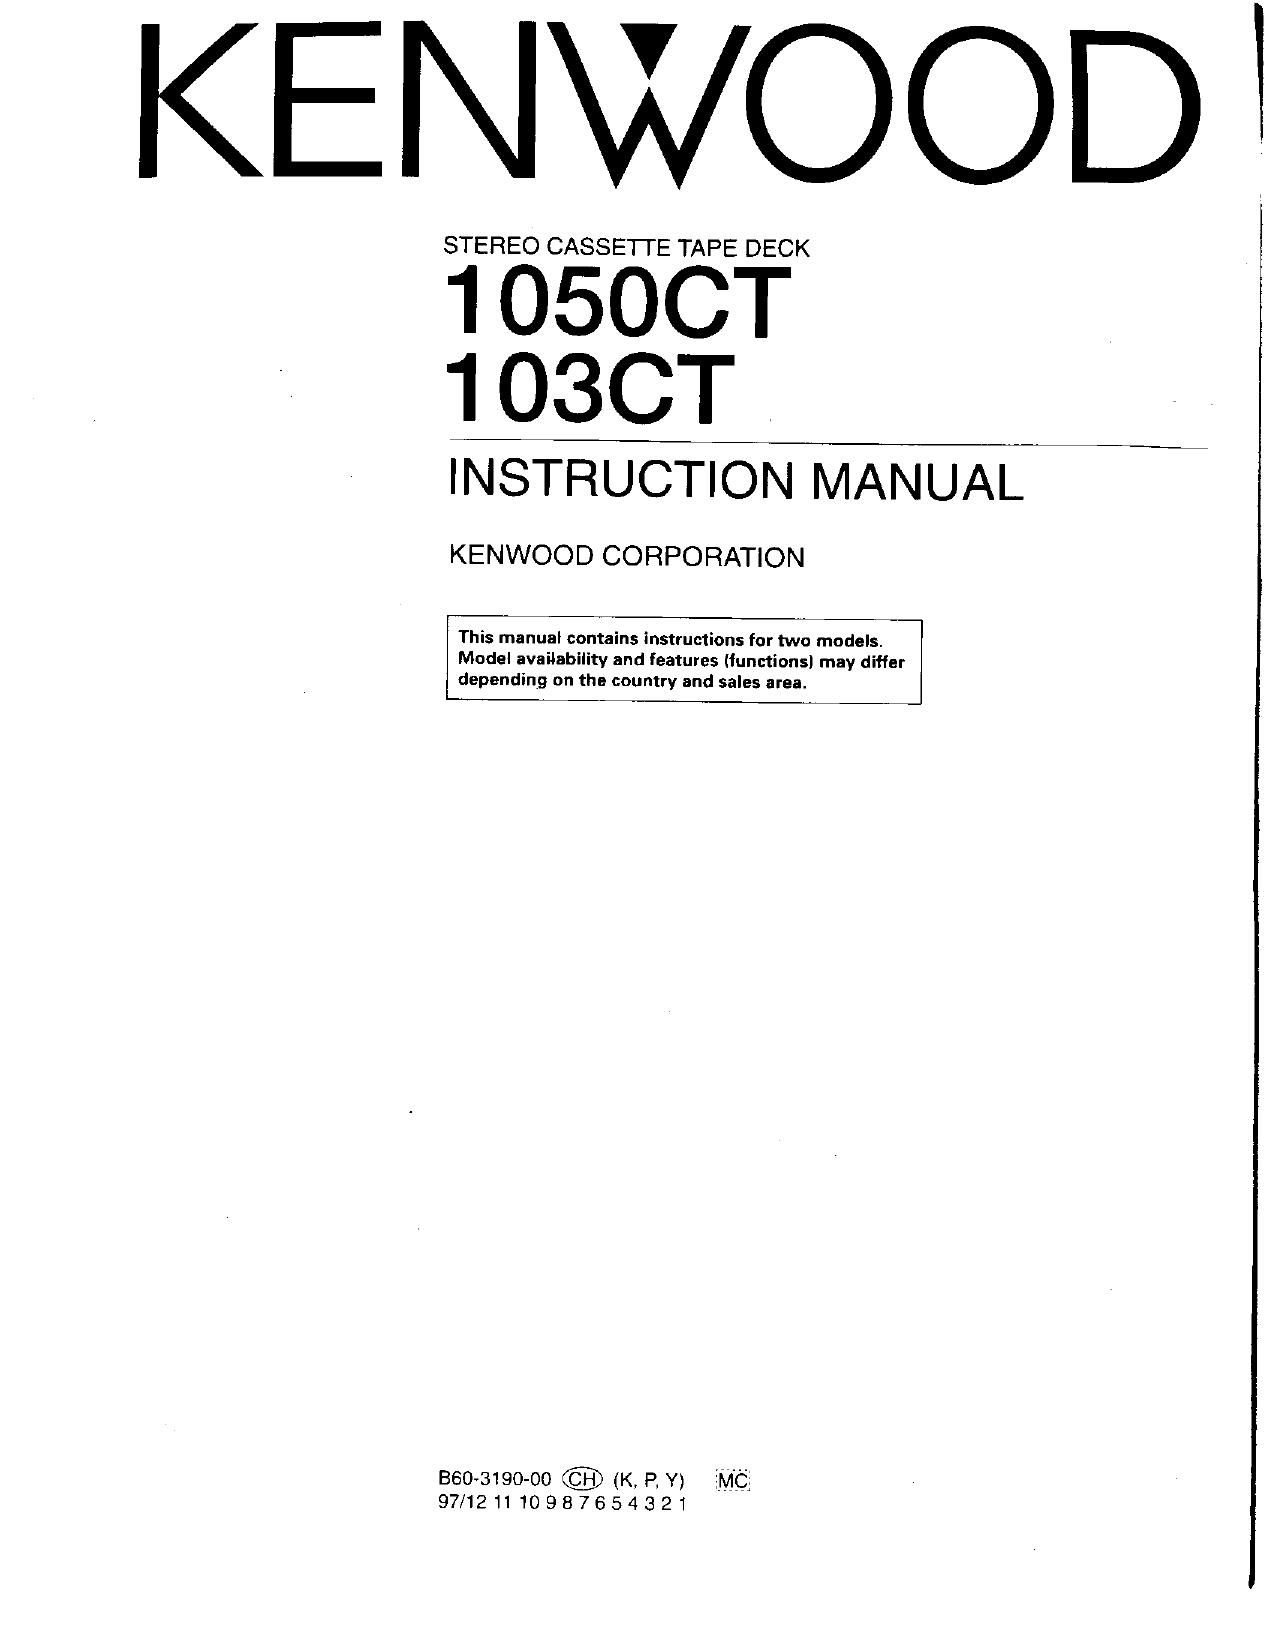 Kenwood 103 CT Owners Manual